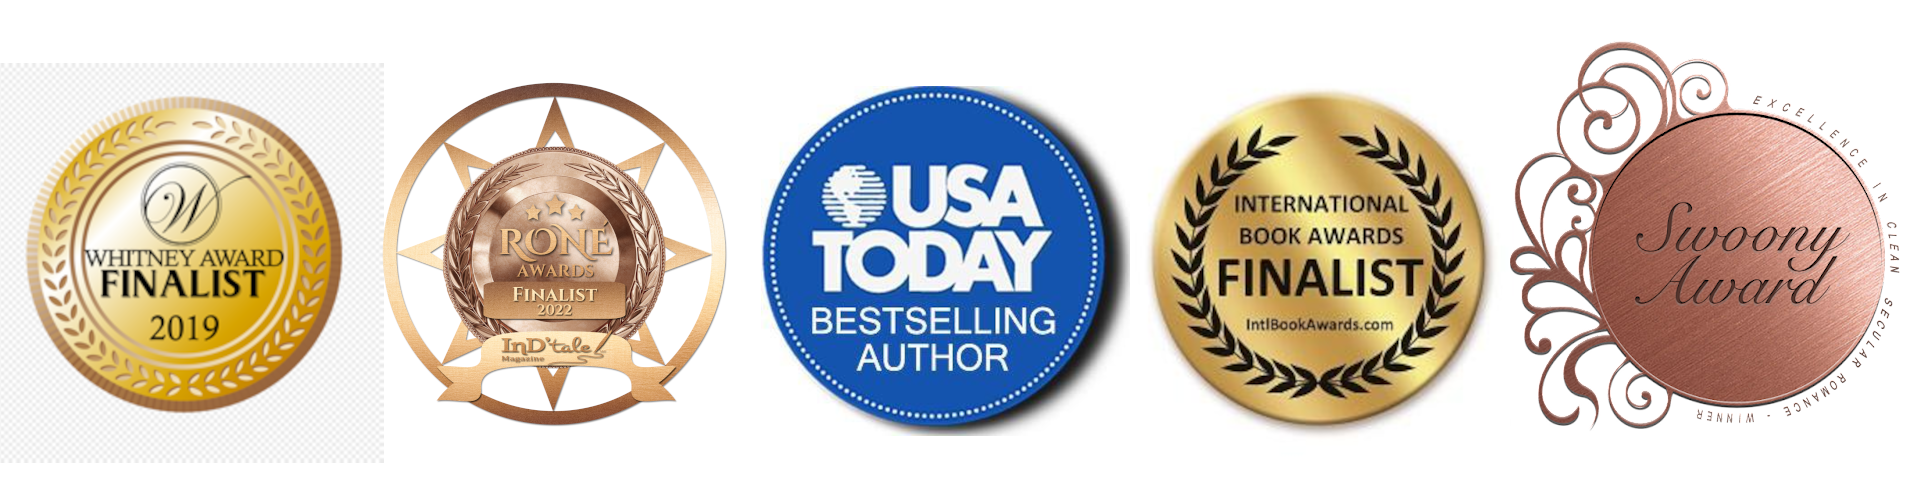 Award badges--Whitney Award finalist, RONE Award finalist, USA Today Bestselling Author, International Book Awards Finalist, Swoony Award winner